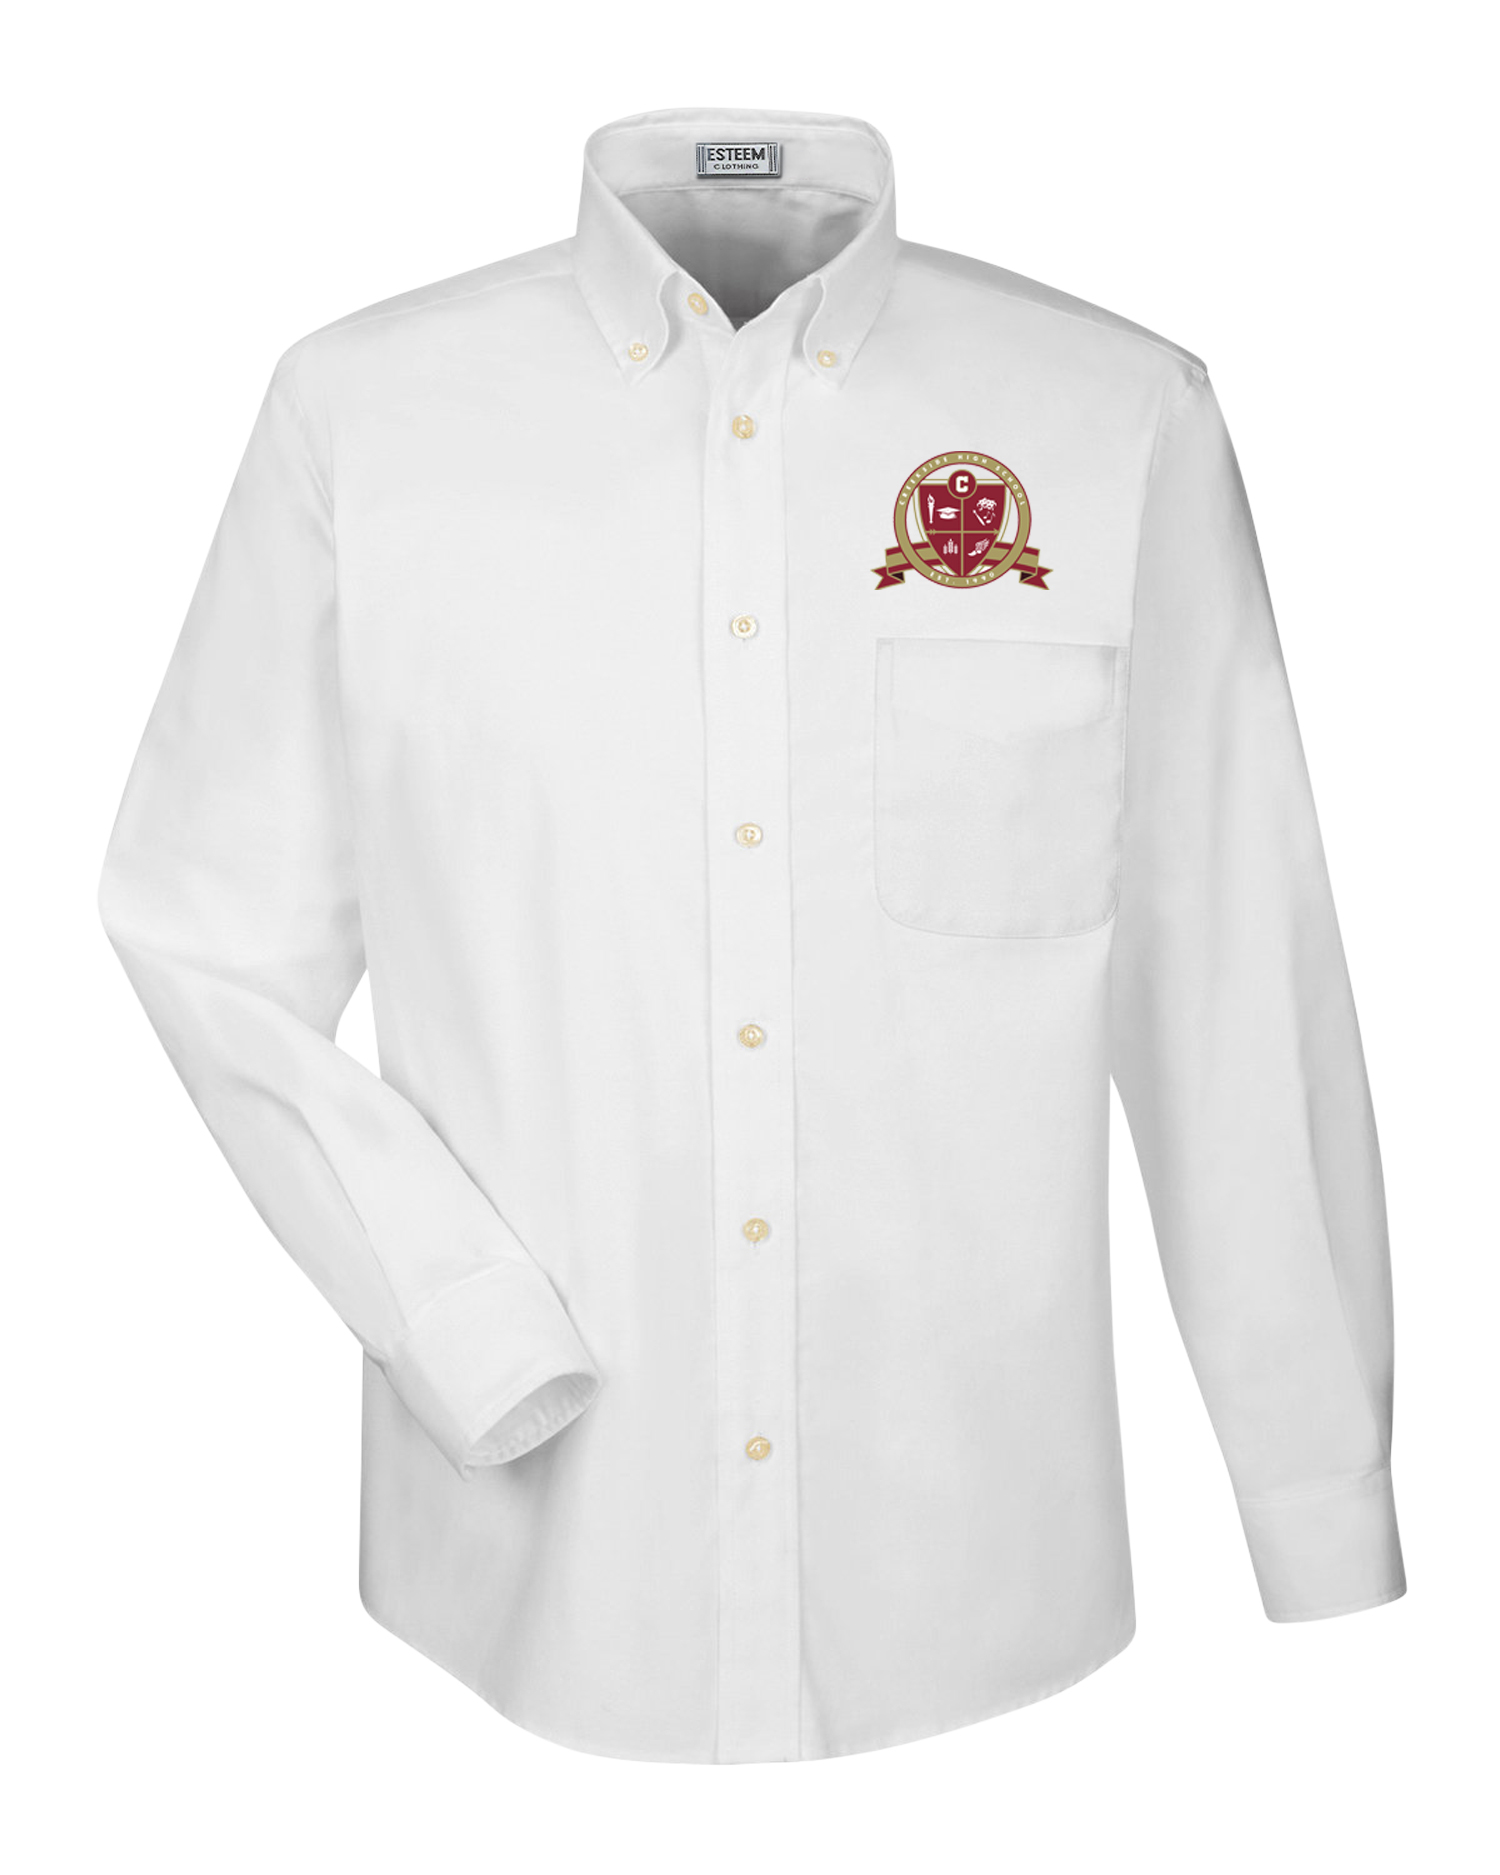 CR - 60% Cotton & 40% Polyester Men's L/S Oxford shirt - 33802